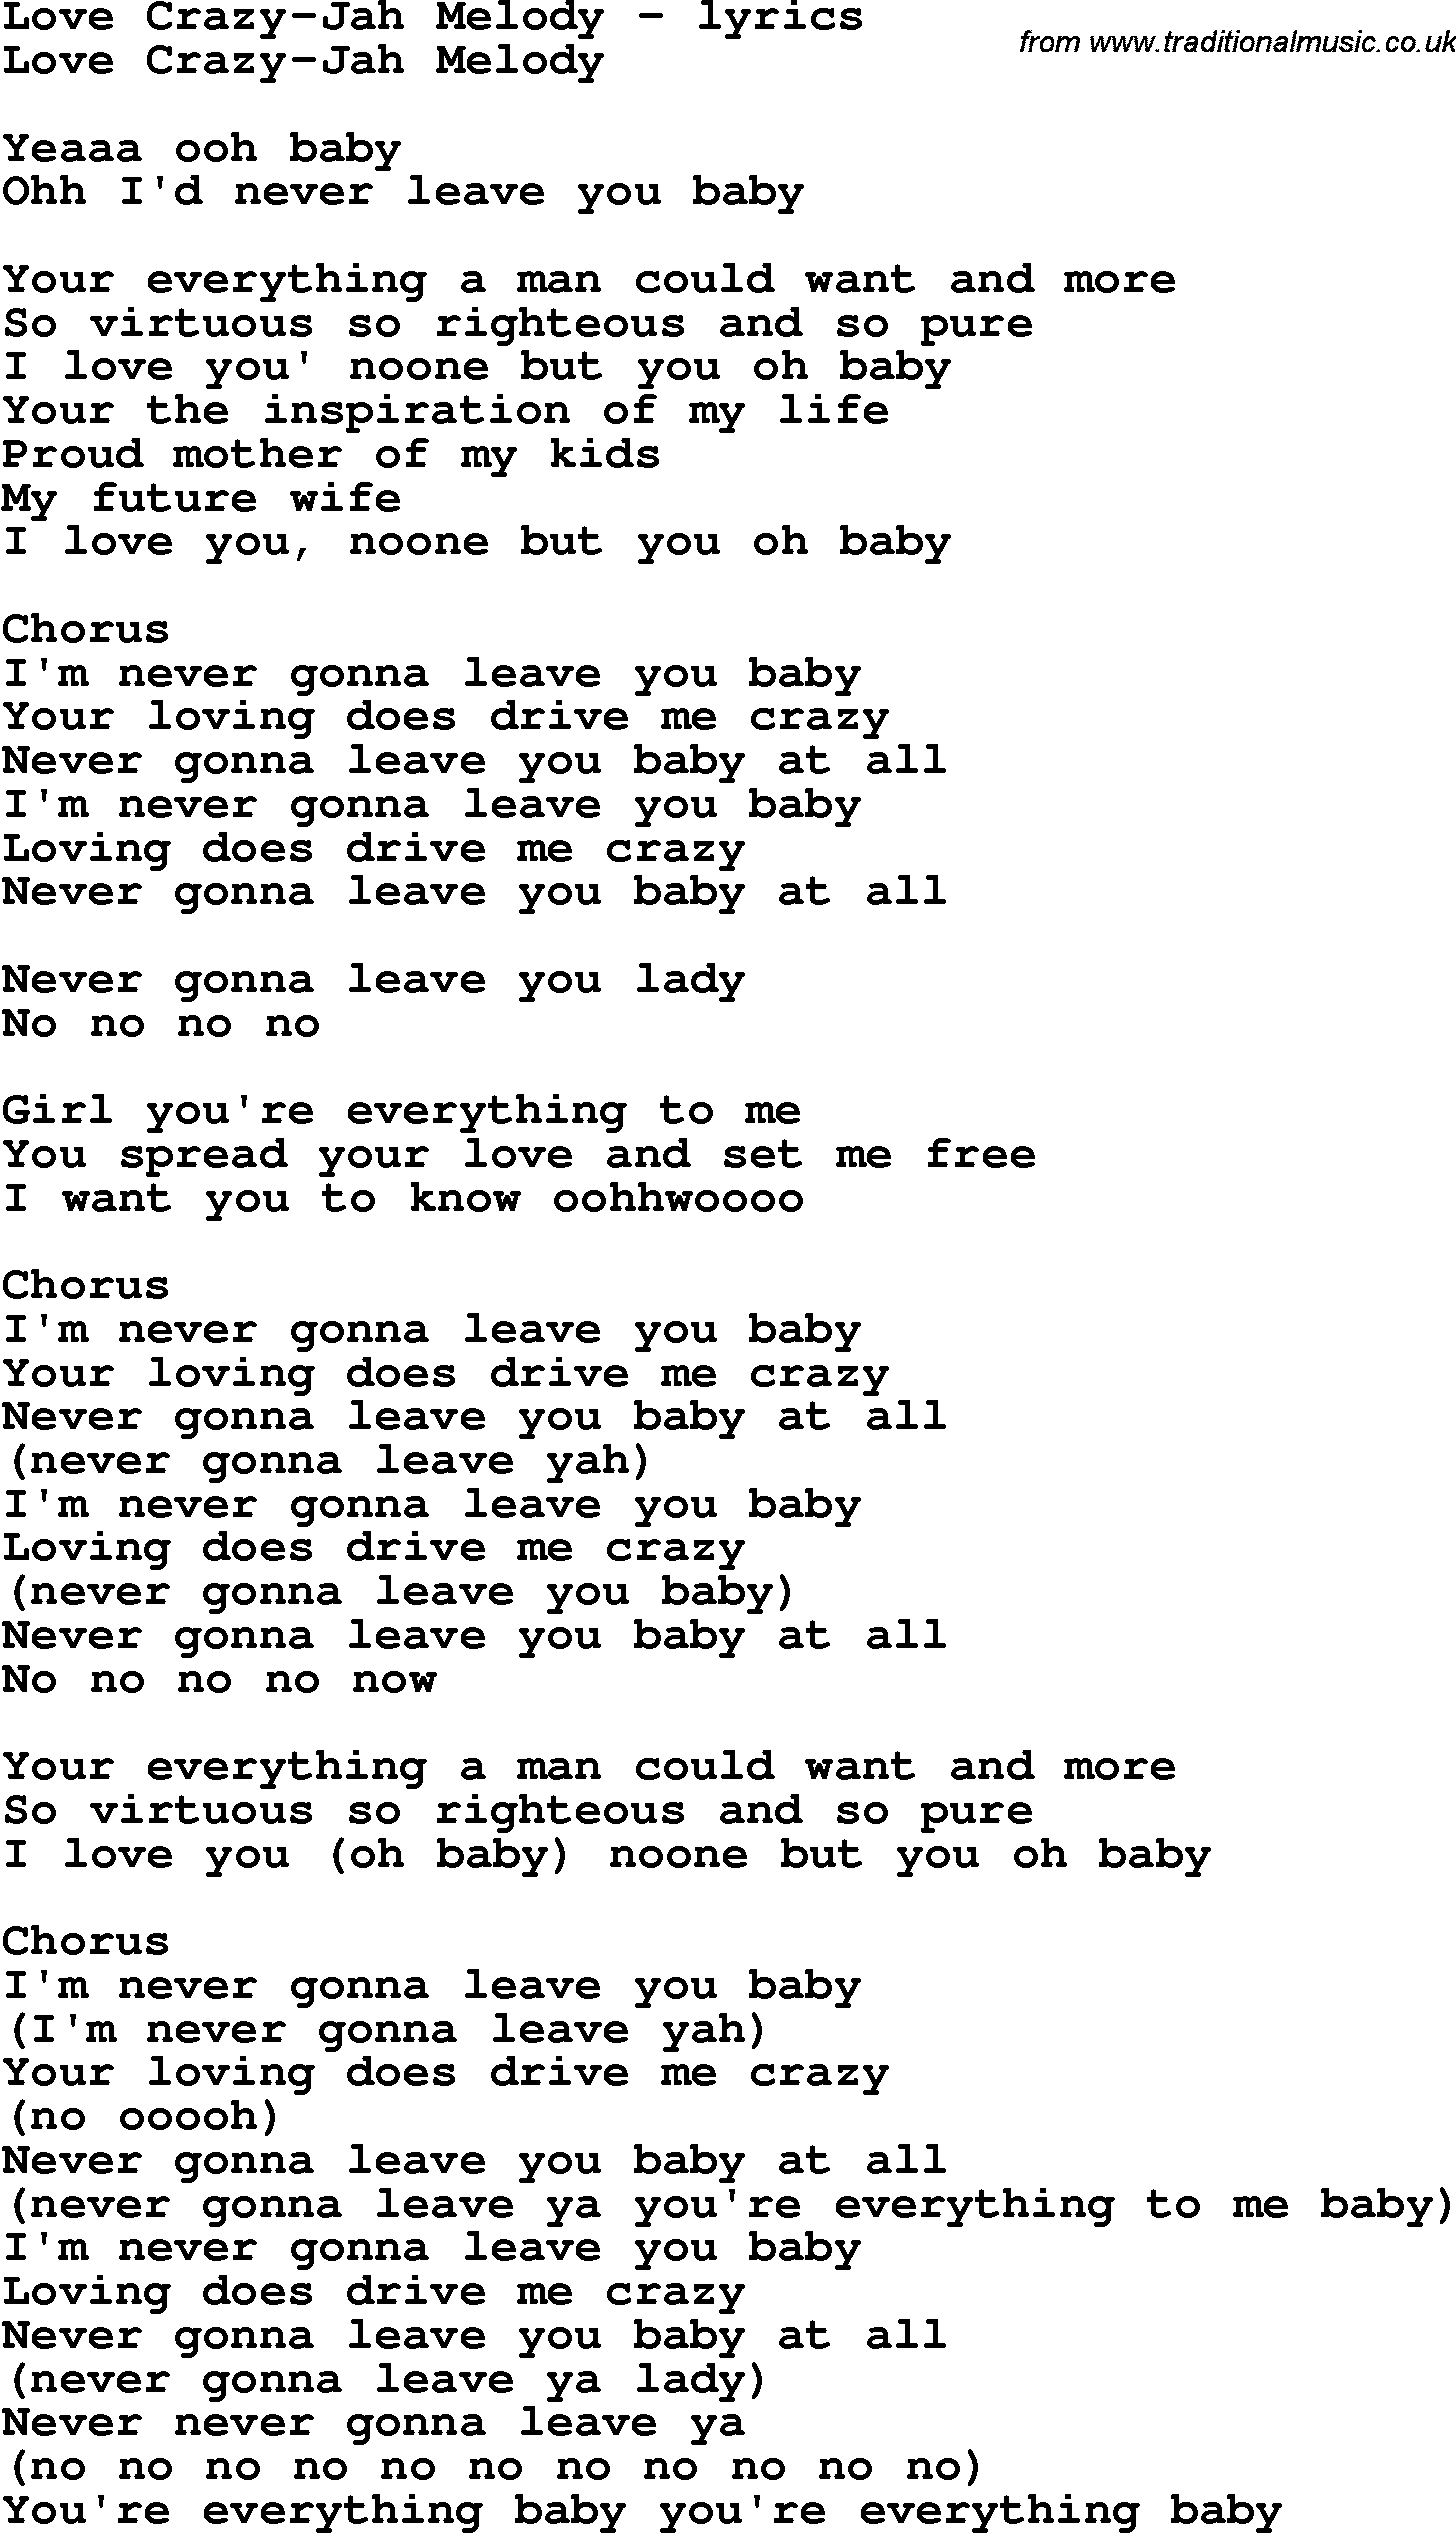 Love Song Lyrics for: Love Crazy-Jah Melody